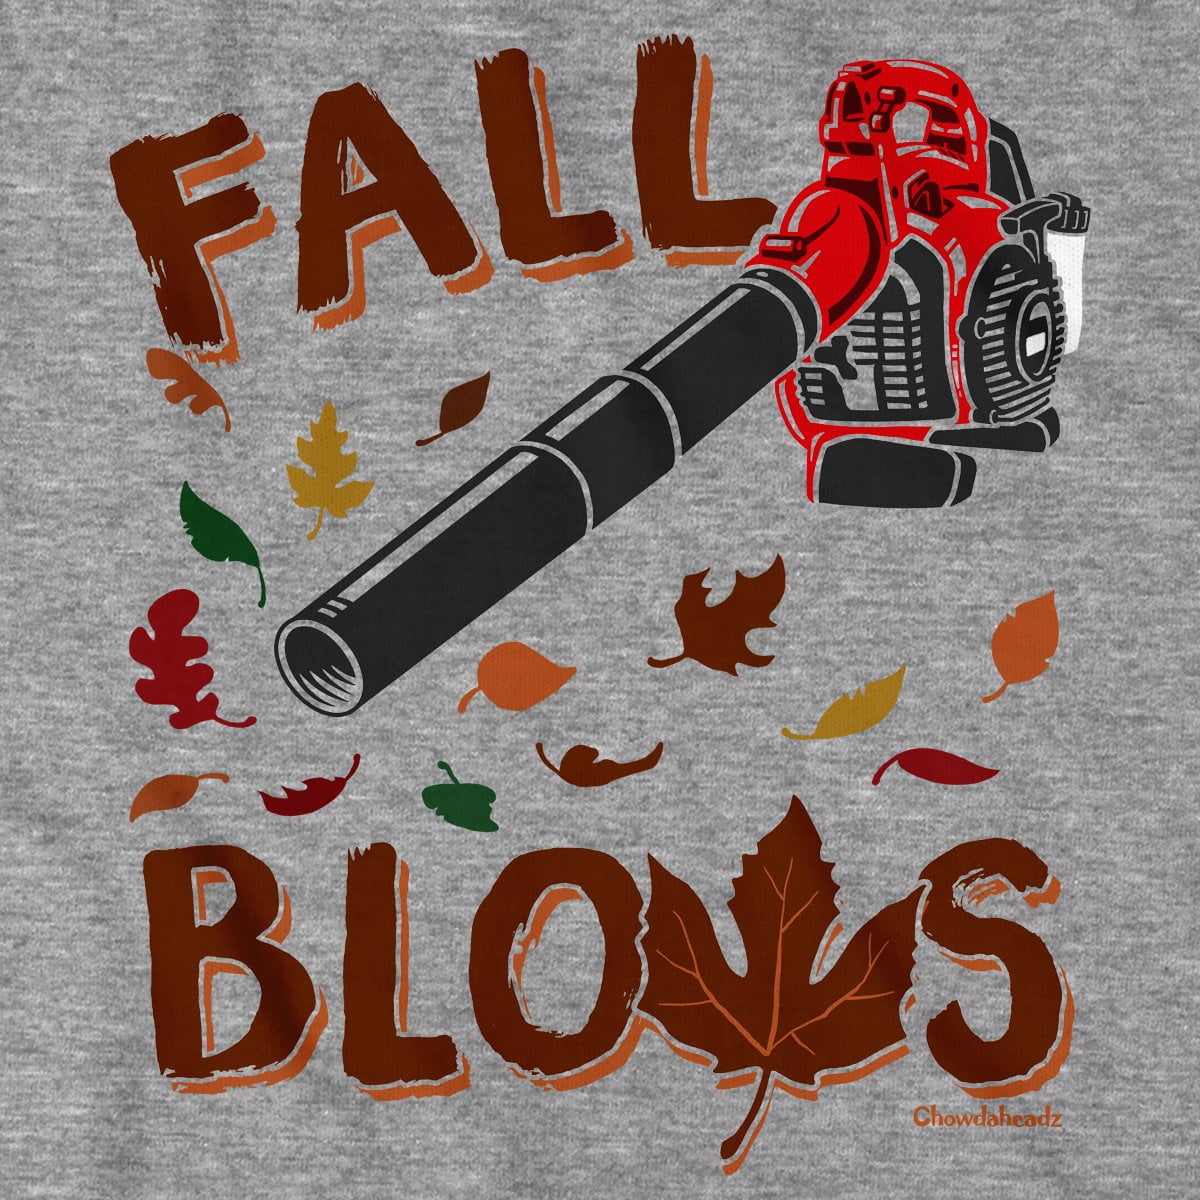 Fall Blows T-Shirt - Chowdaheadz